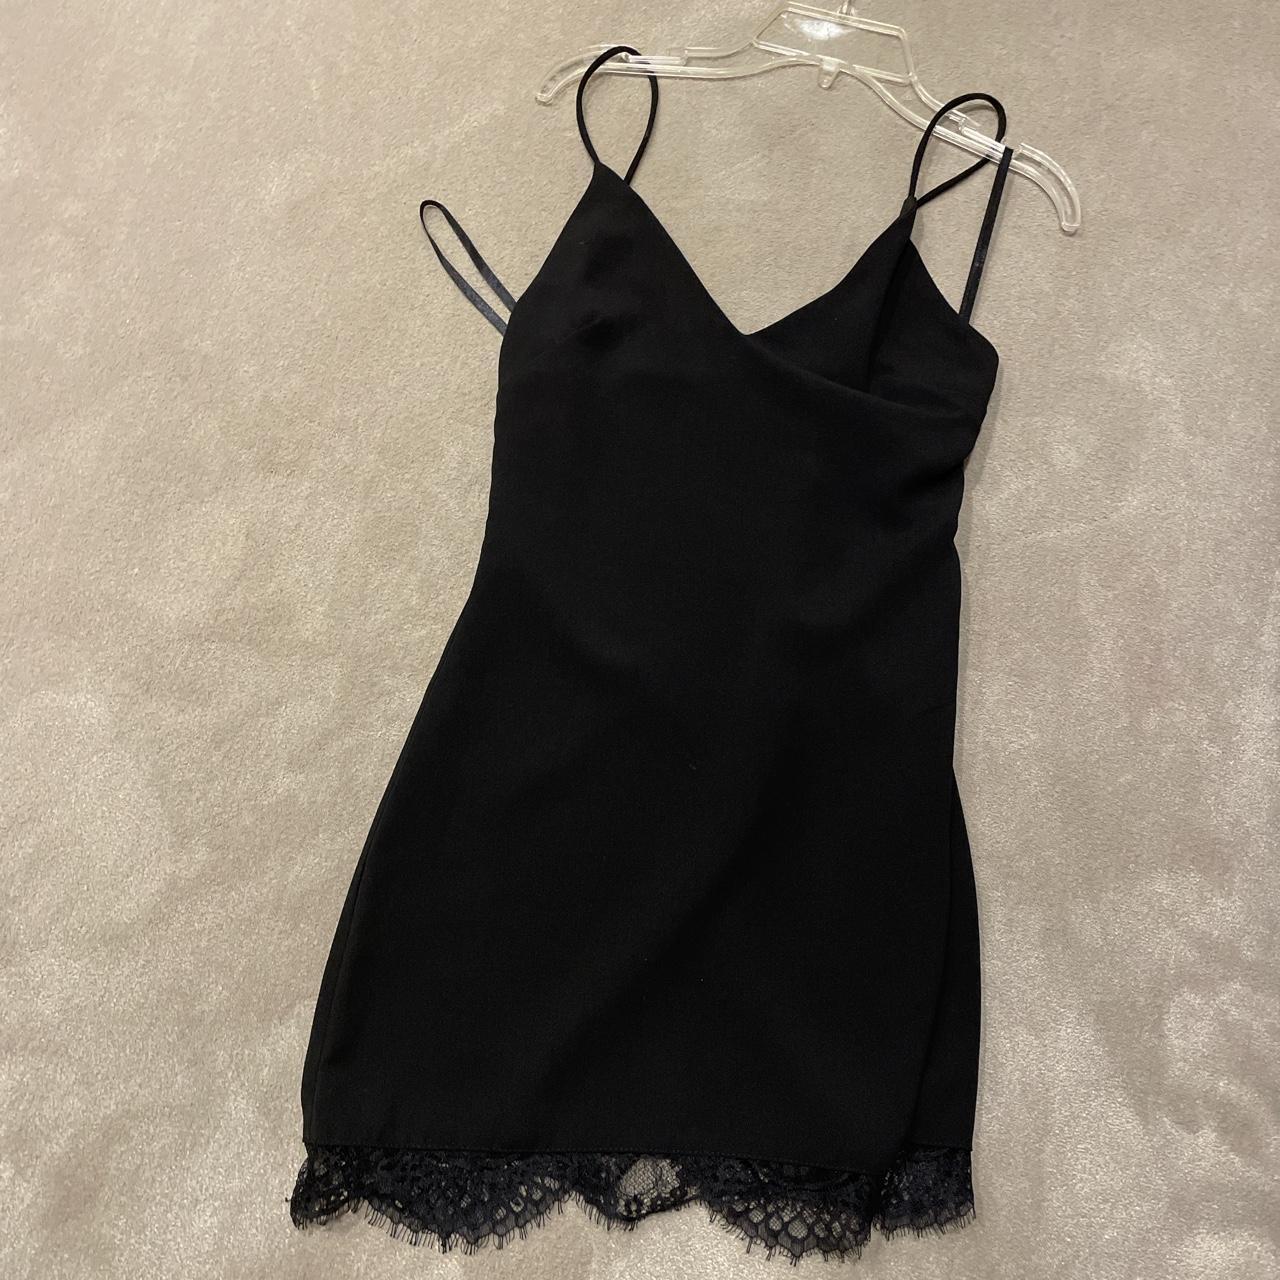 #superdown #revolve Black mini dress size xs would... - Depop